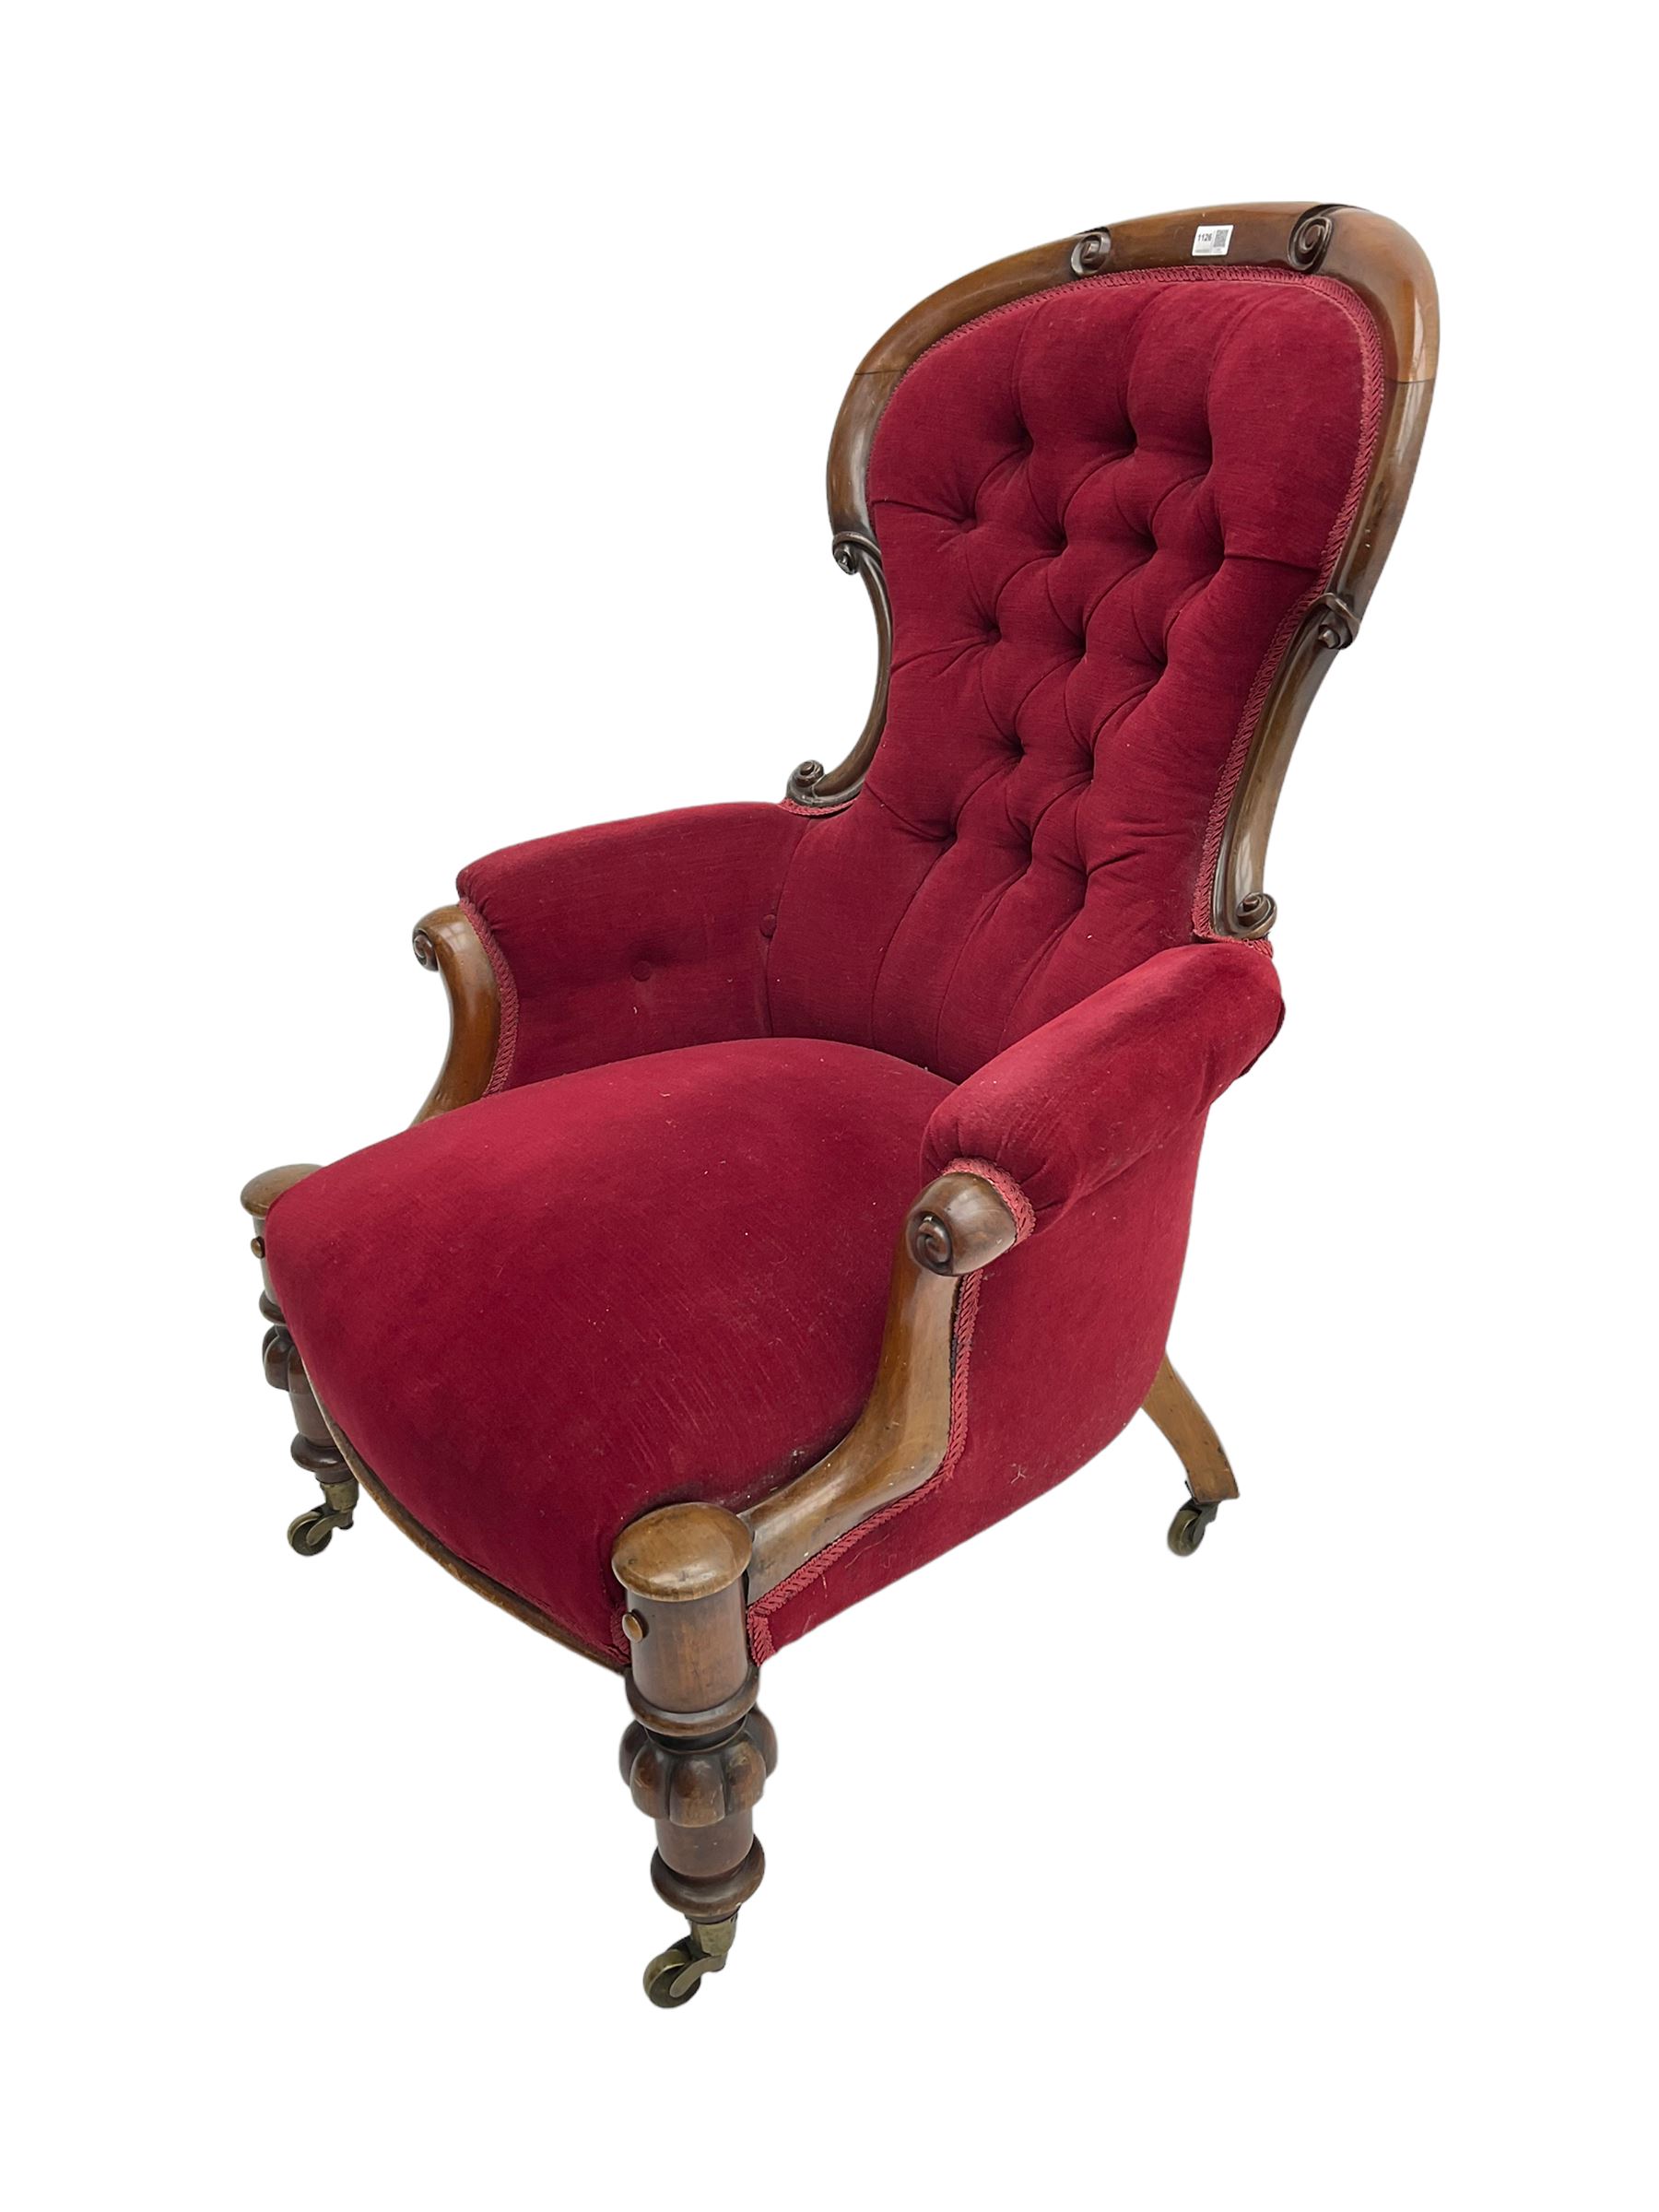 Victorian mahogany armchair - Image 4 of 6